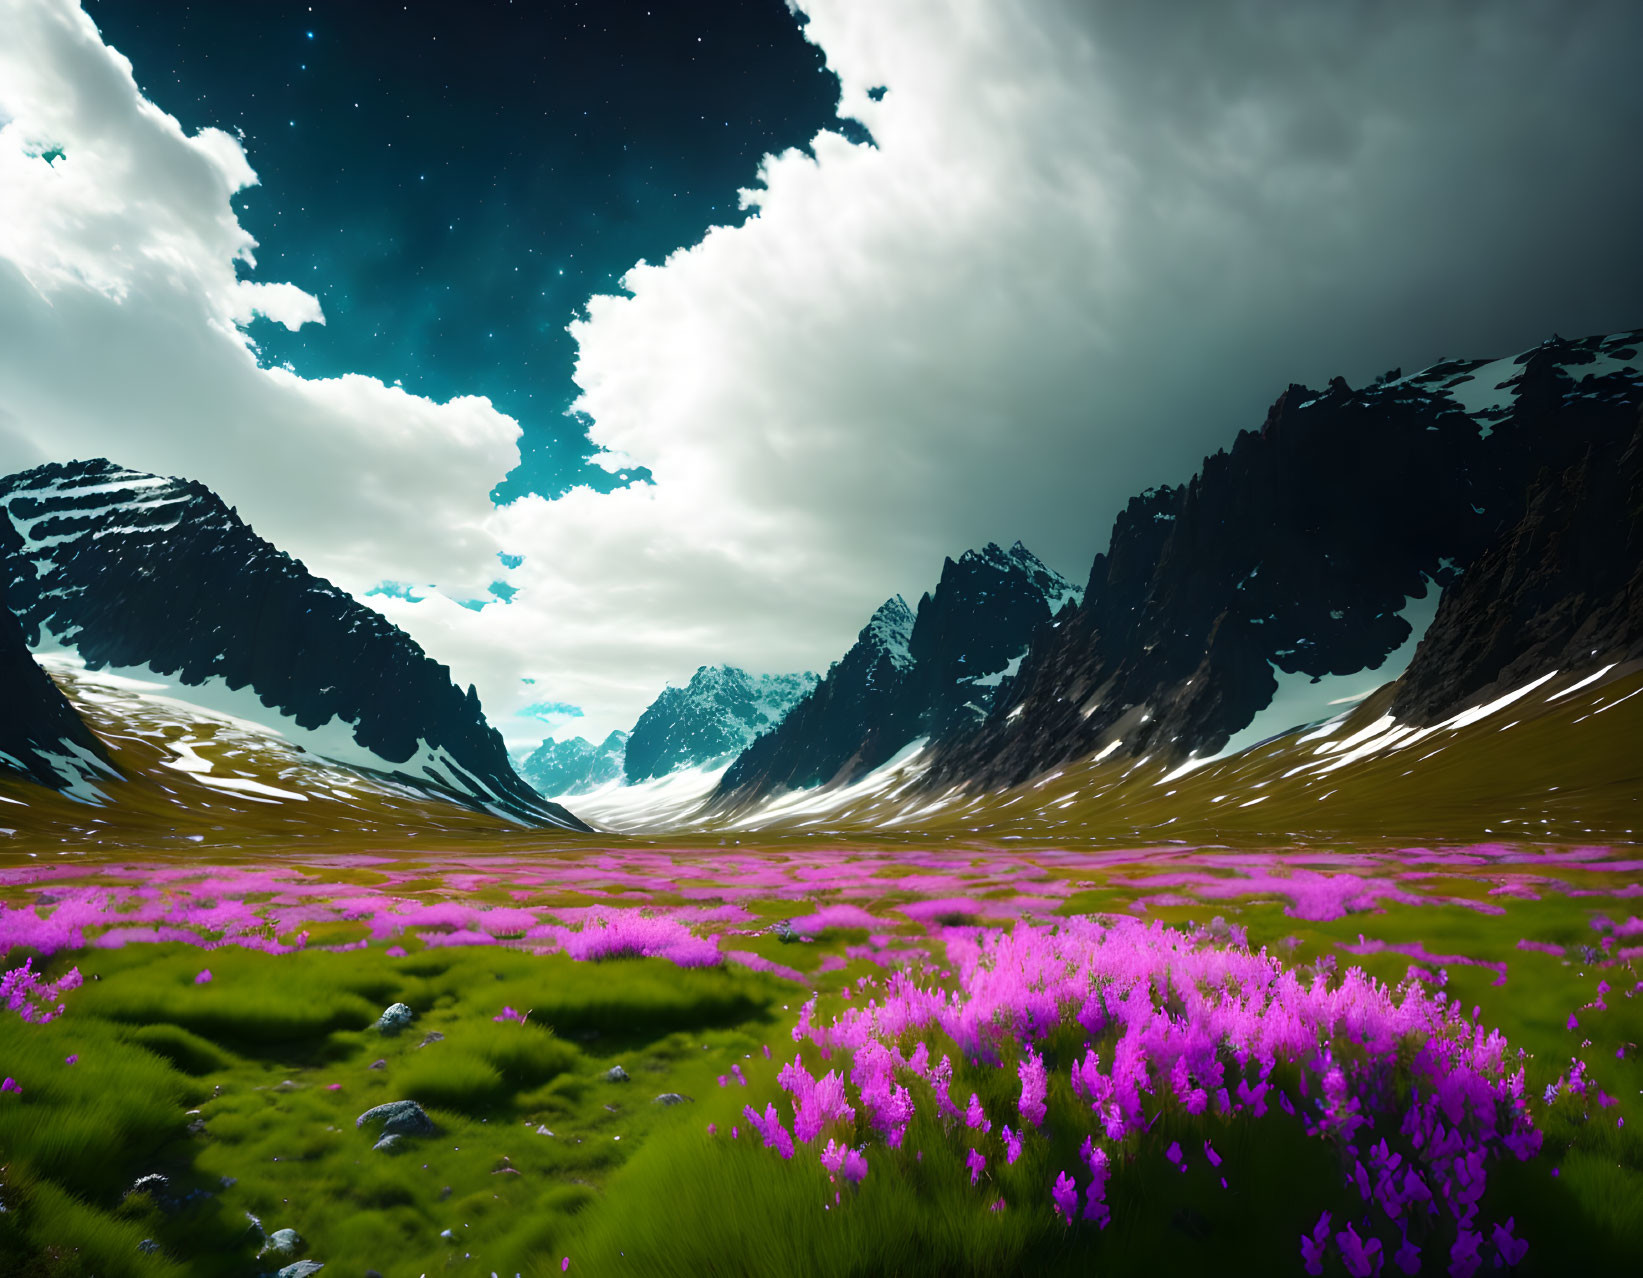 Scenic valley with purple flowers, snowy peaks, starry sky